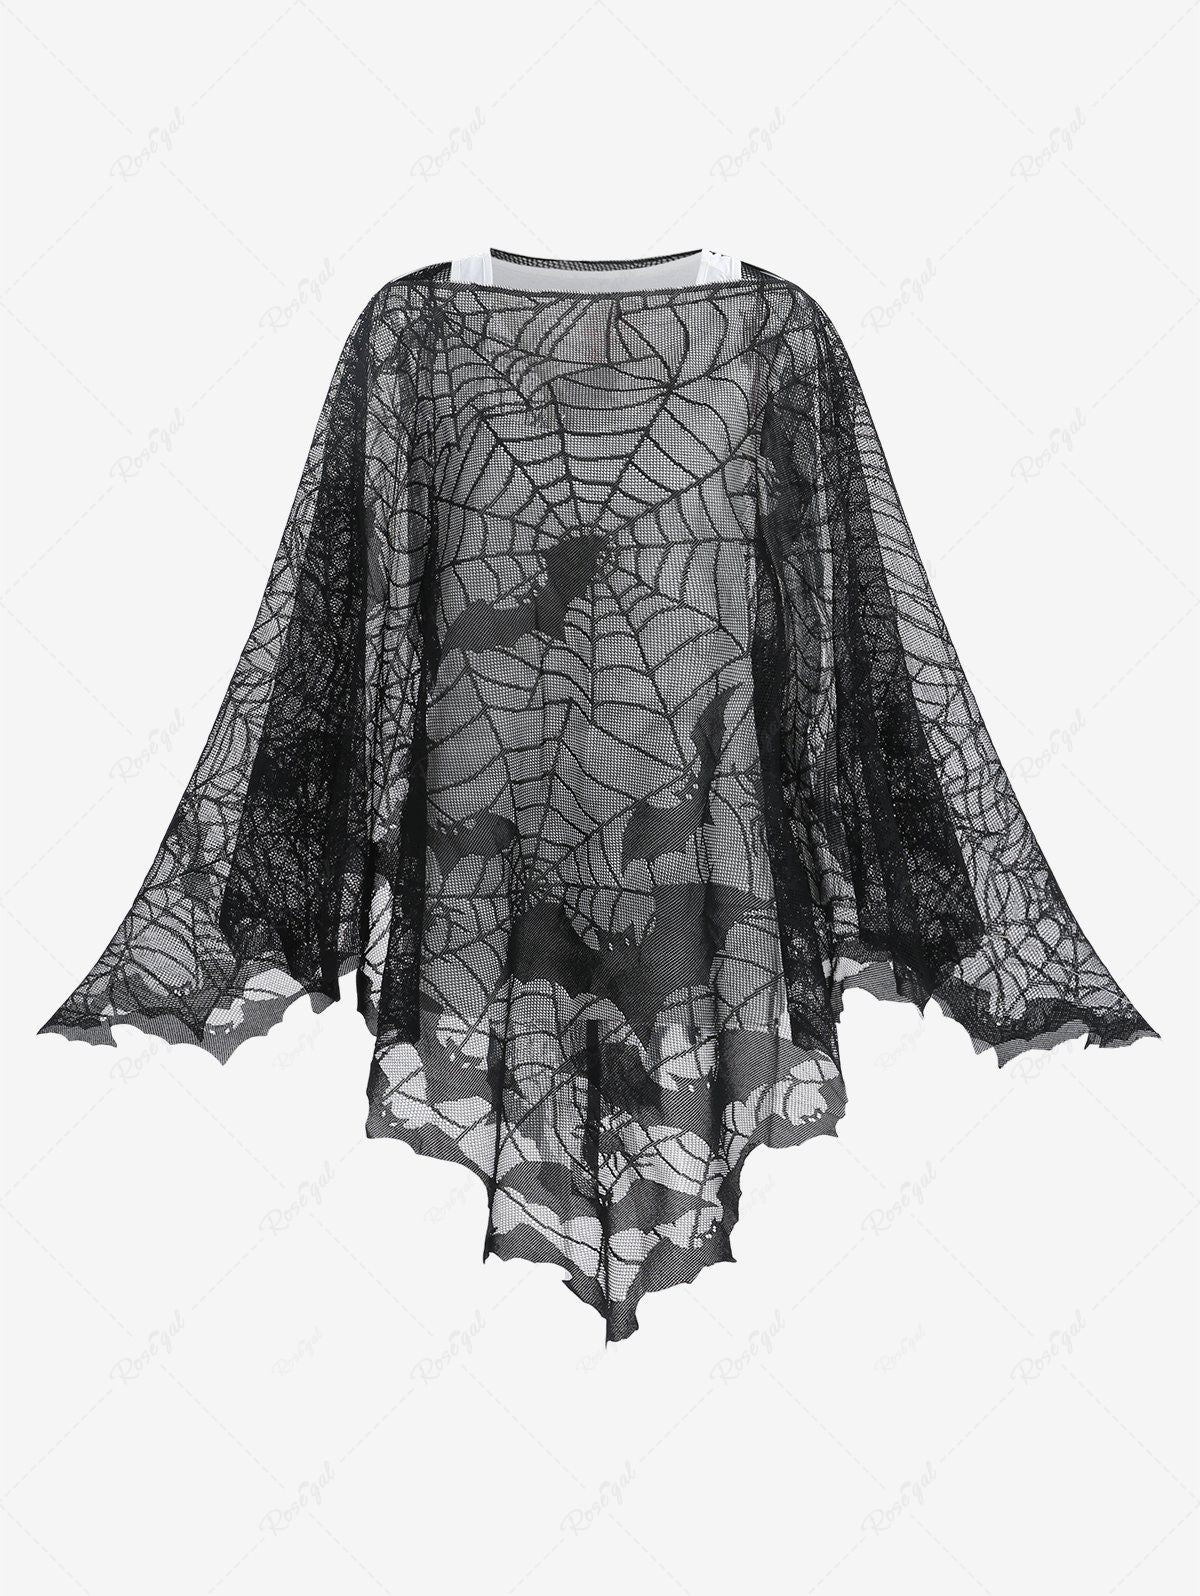 Halloween Costume Gothic Bat Spider Web Graphic Mesh Asymmetric Poncho Cloak Cape